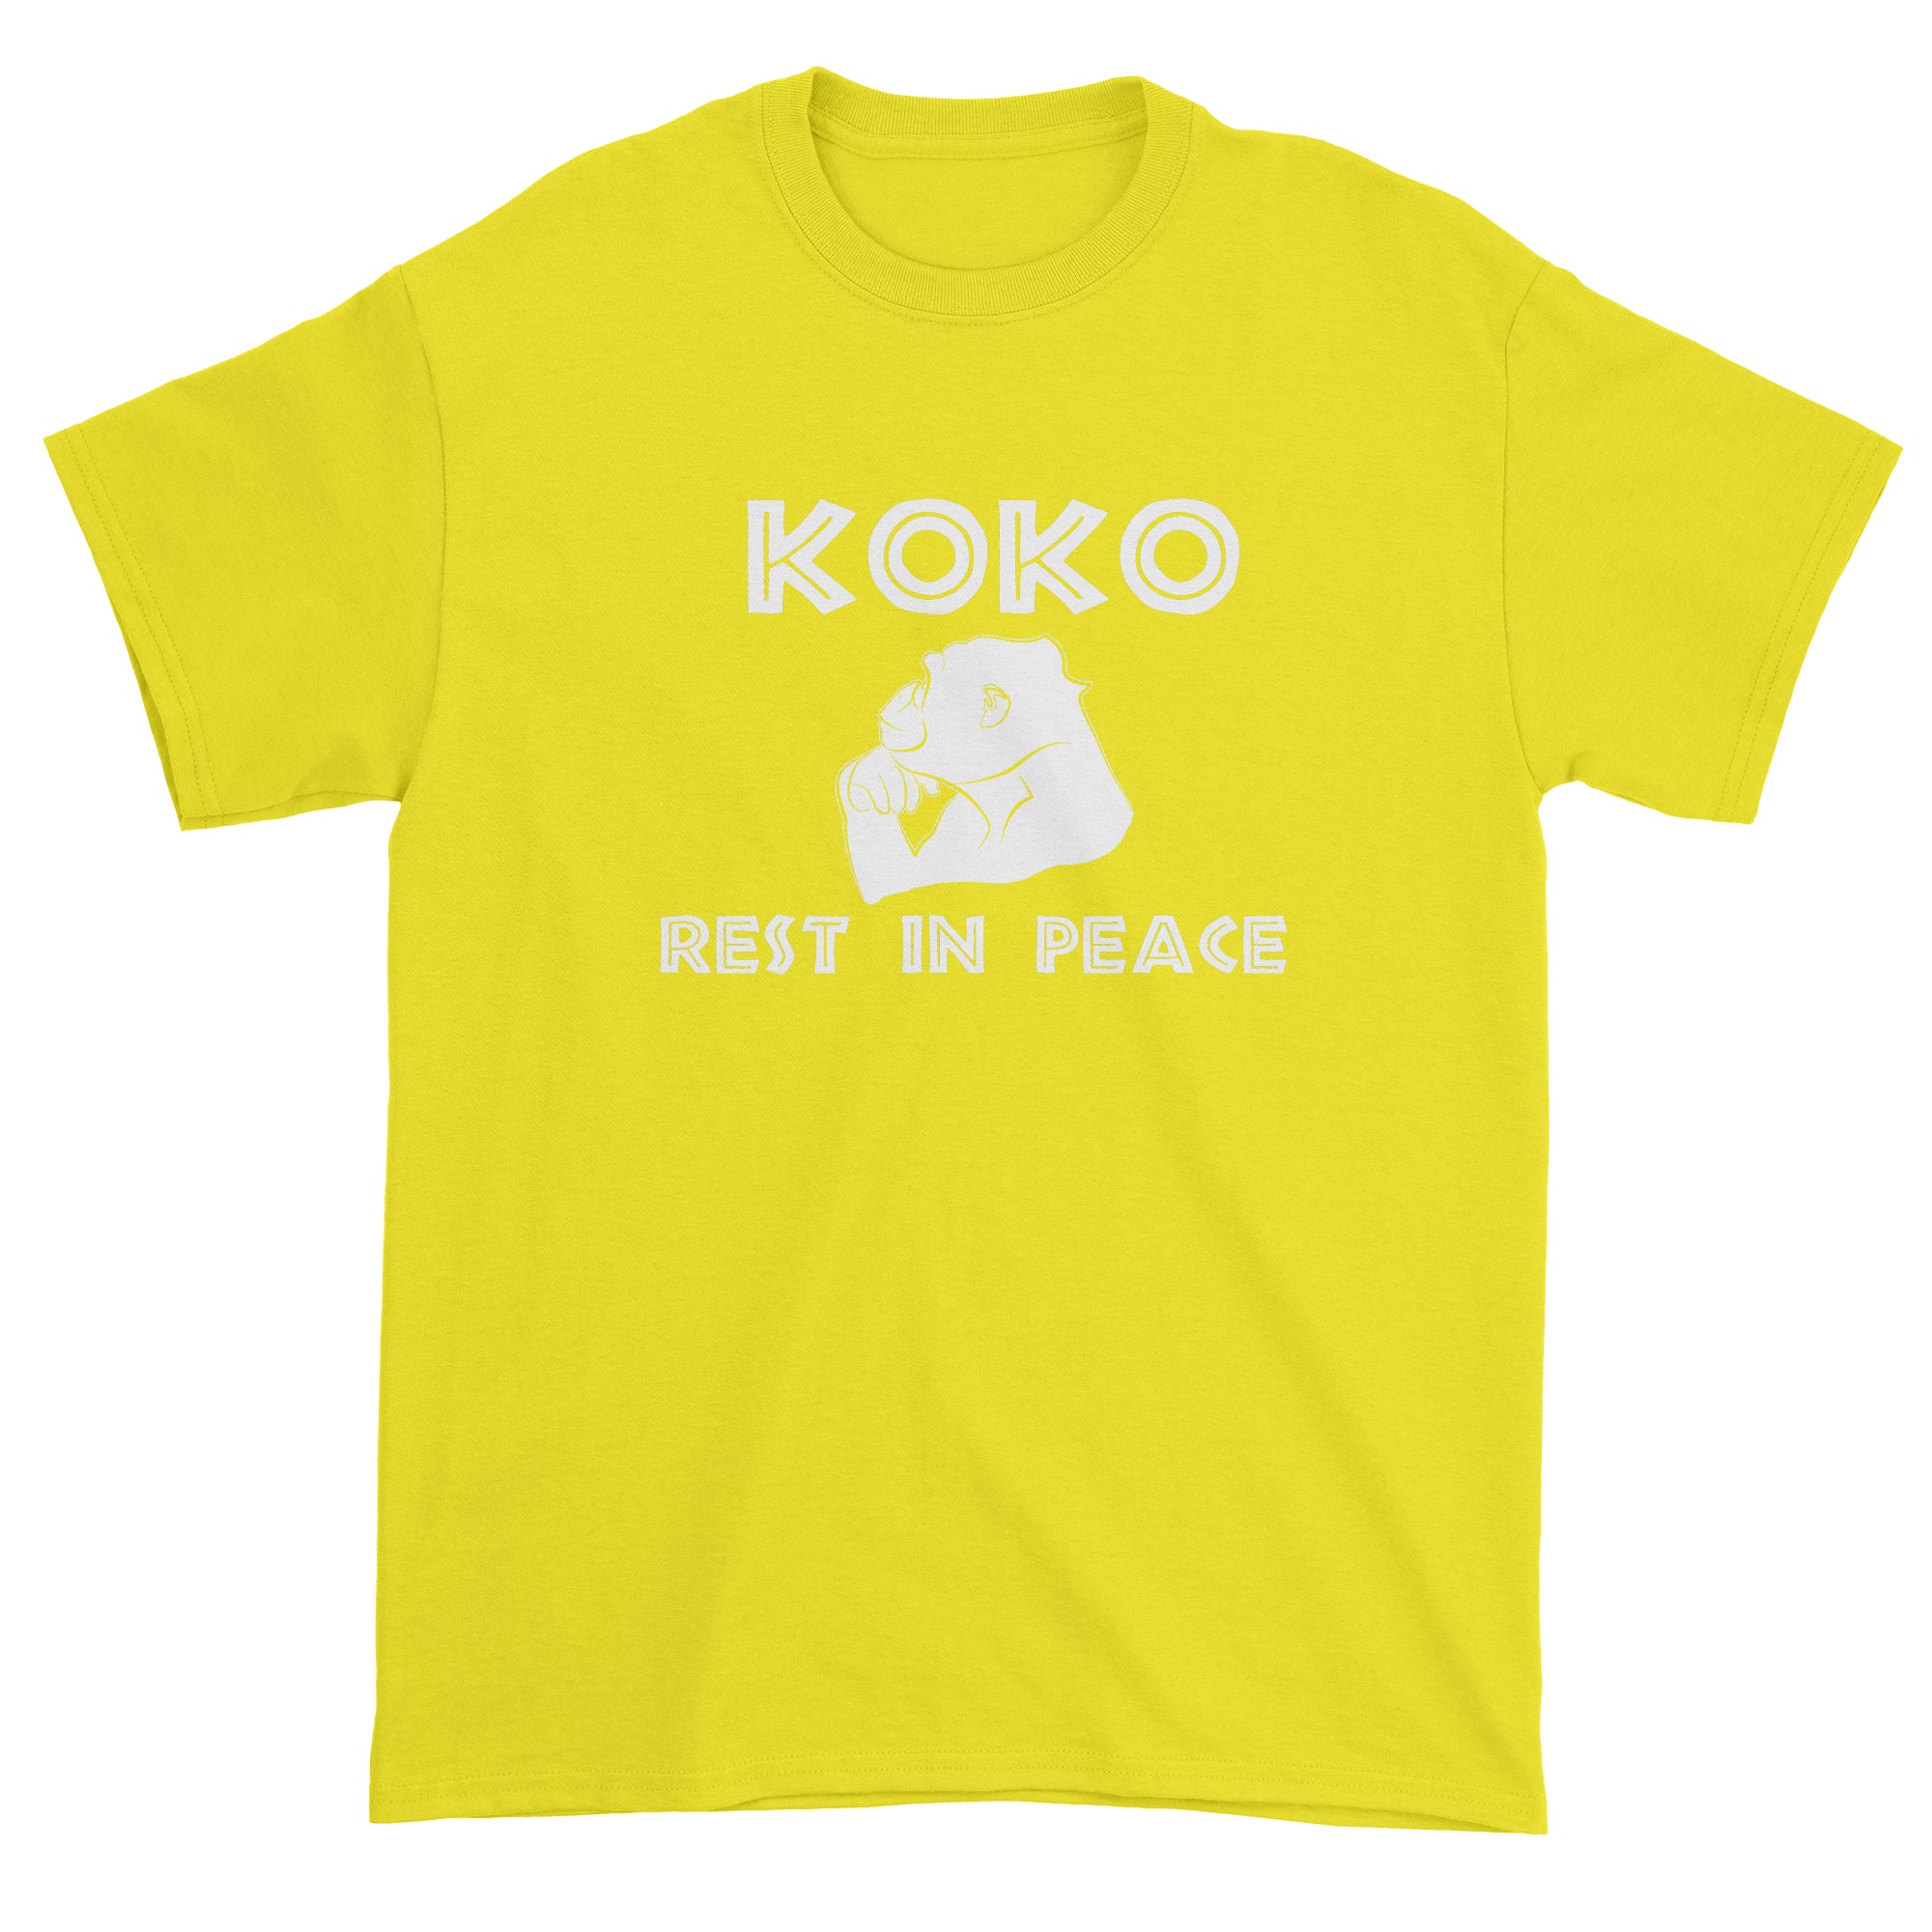 Koko the Talking Gorilla Rest in Peace Men's T-Shirt